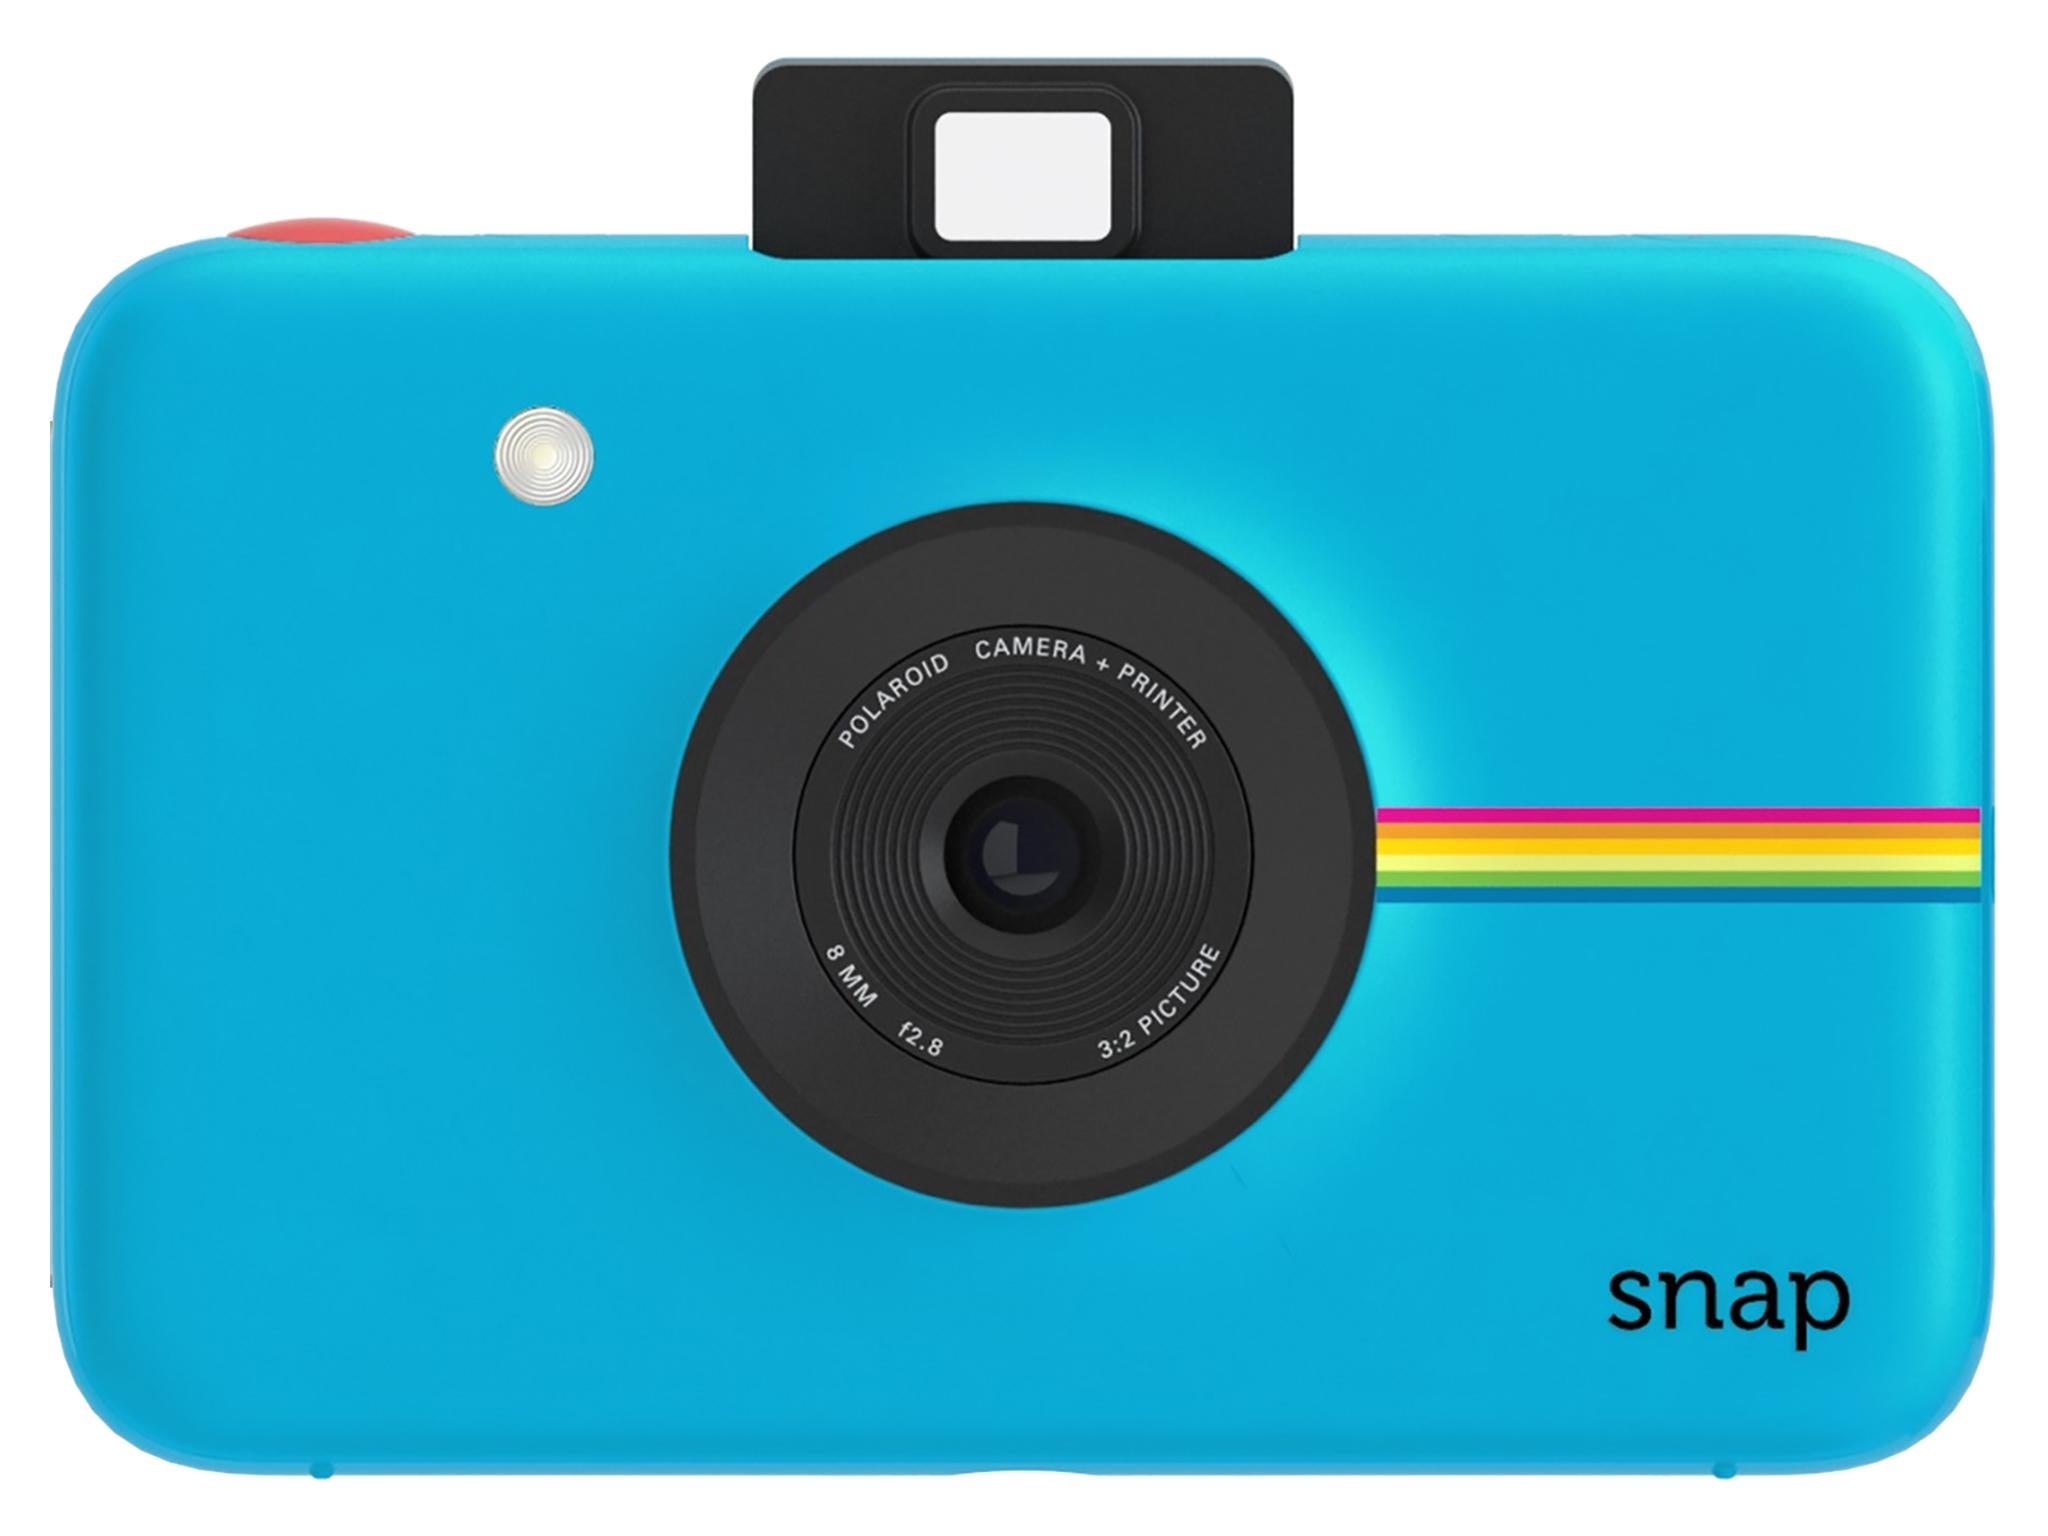 Polaroid Snap prints digital photos instantly